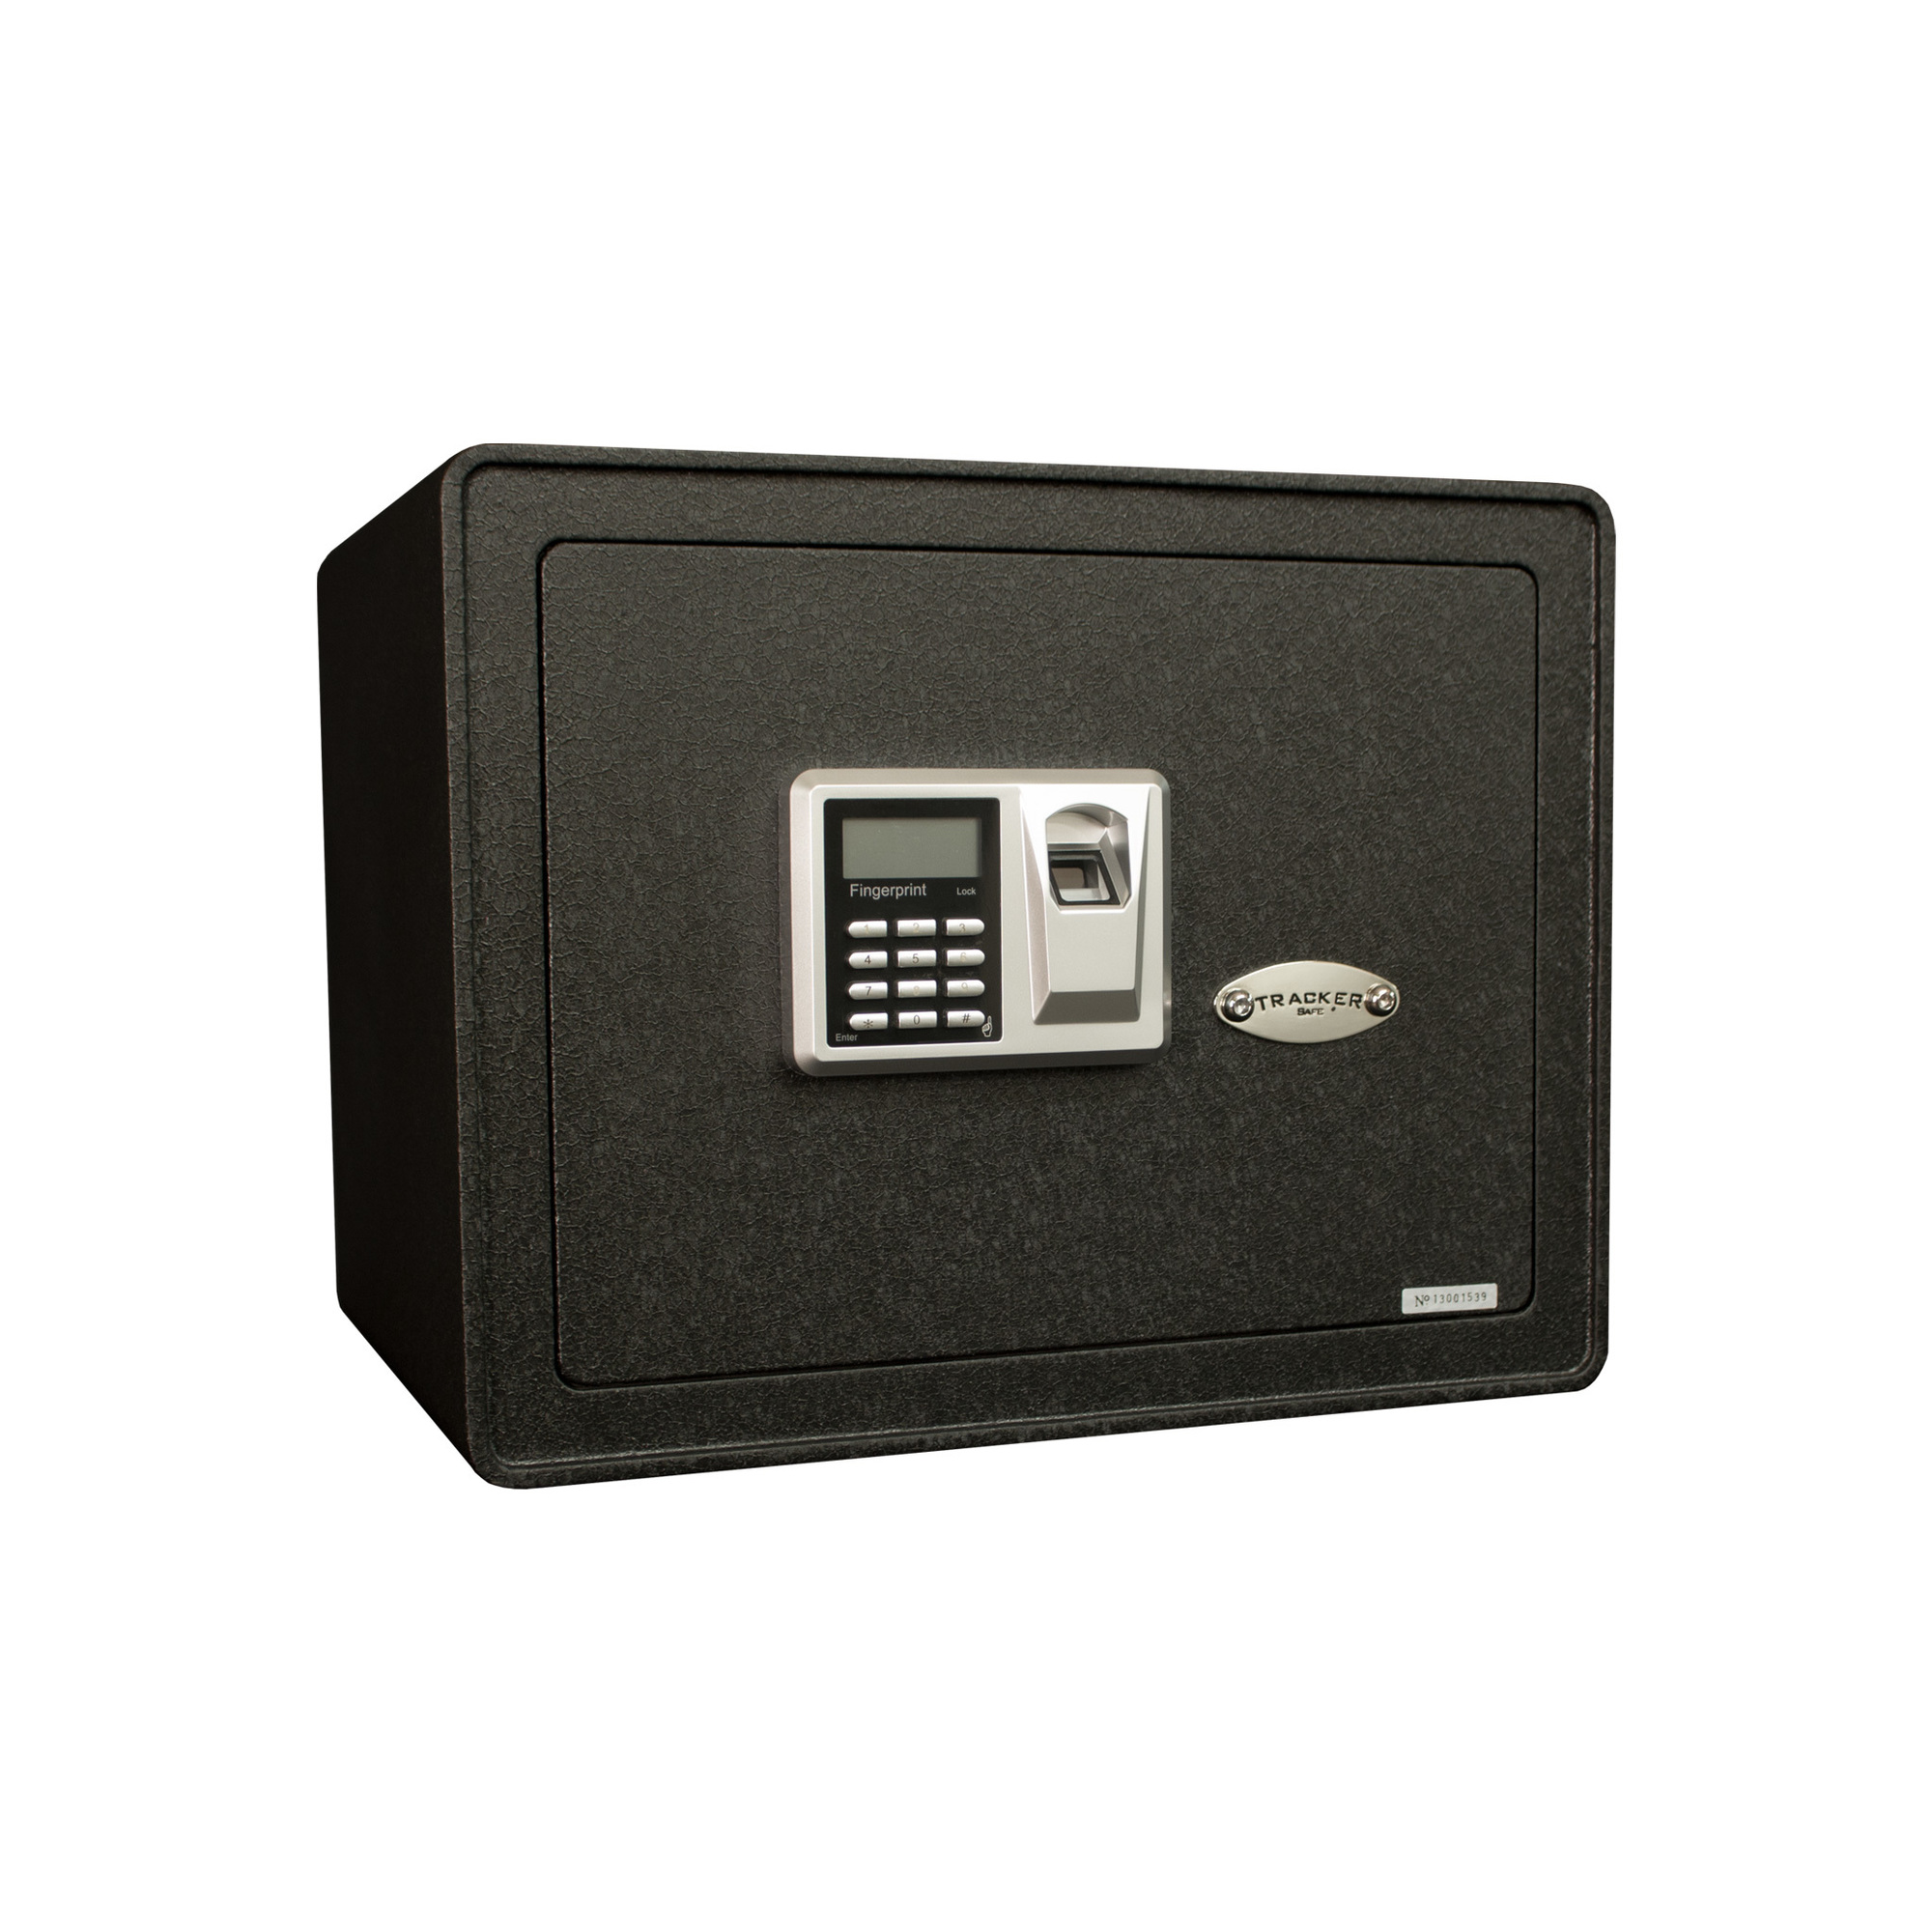 Tracker Safe, 1.21 cu. ft. Steel Security Safe, Biometric Lock, Lock Type Biometric, Model S12